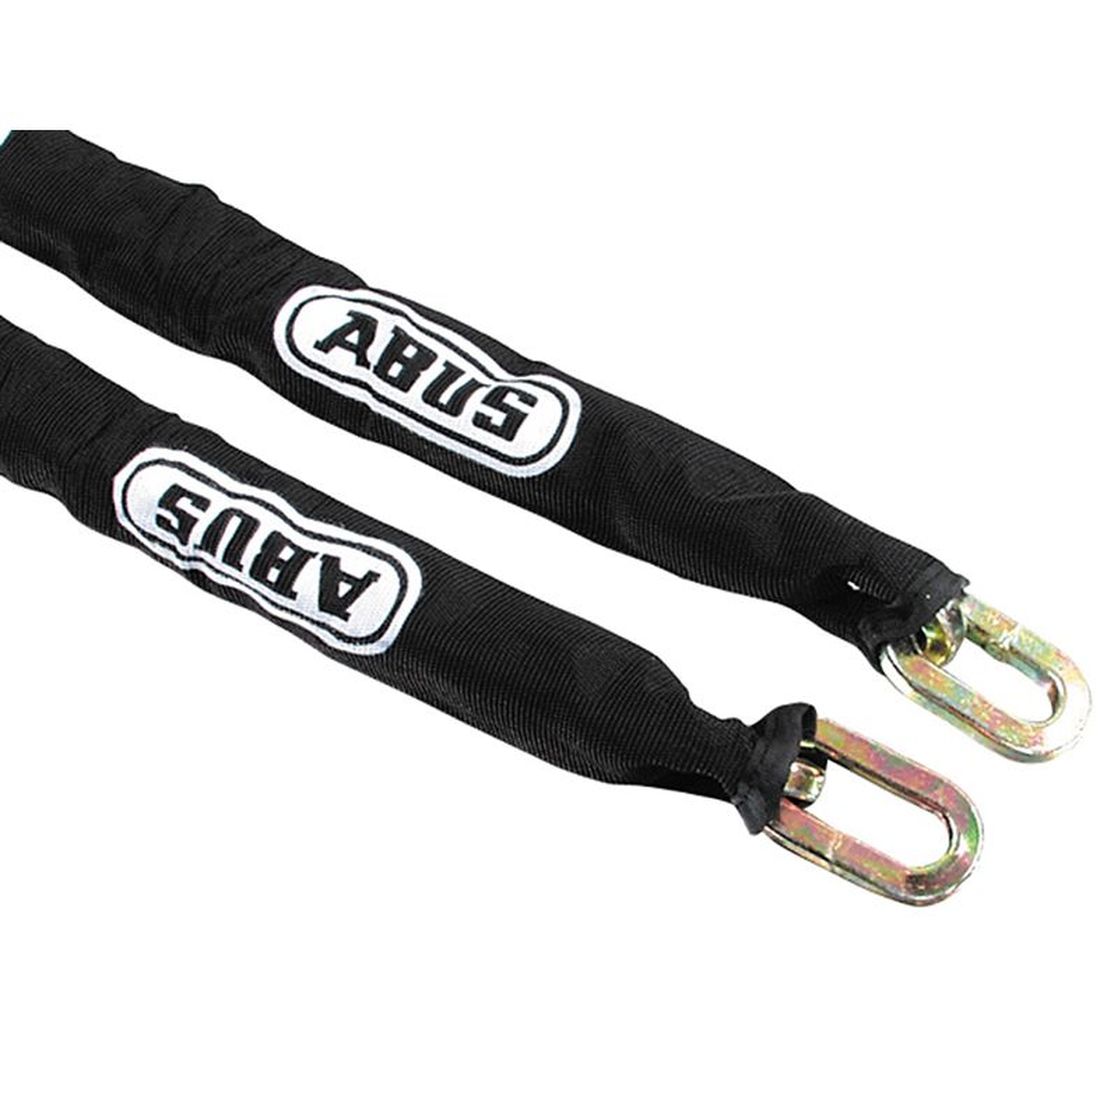 ABUS 10KS/170 Security Chain Length 170cm Link Diameter 10mm                         